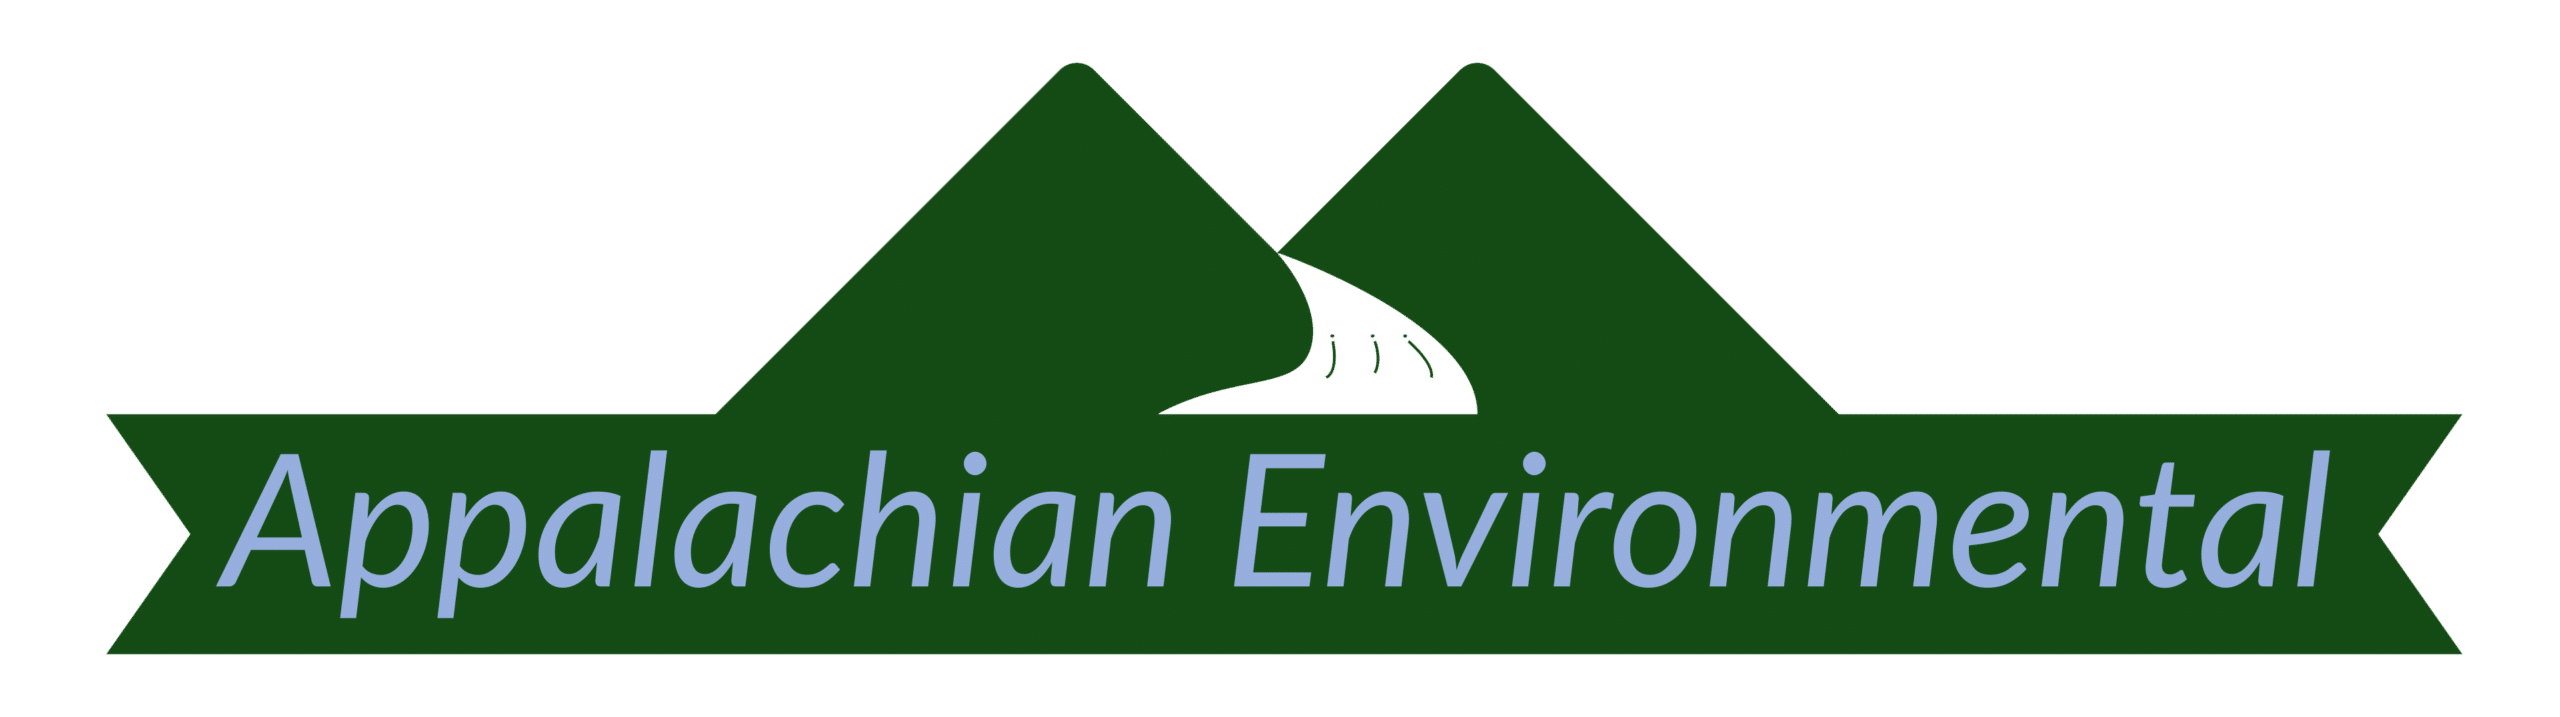 Appalachian Environmental